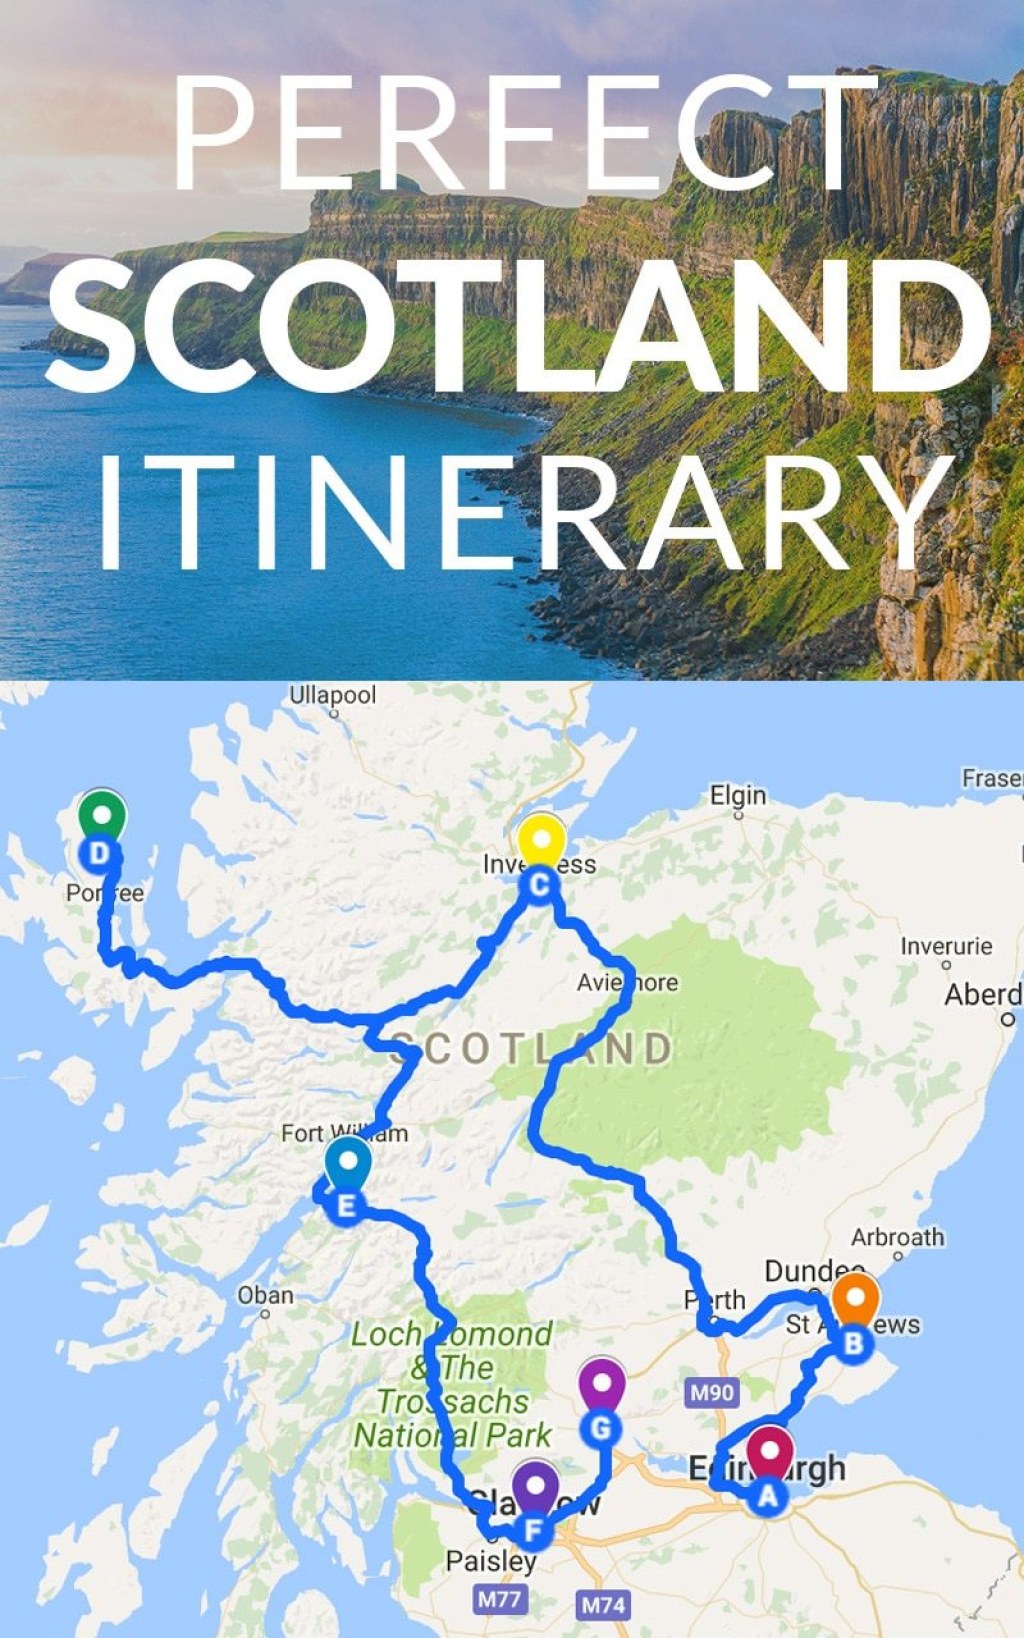 scotland trip itinerary 3 days - Perfect Scotland Itinerary  Wanderlust Crew